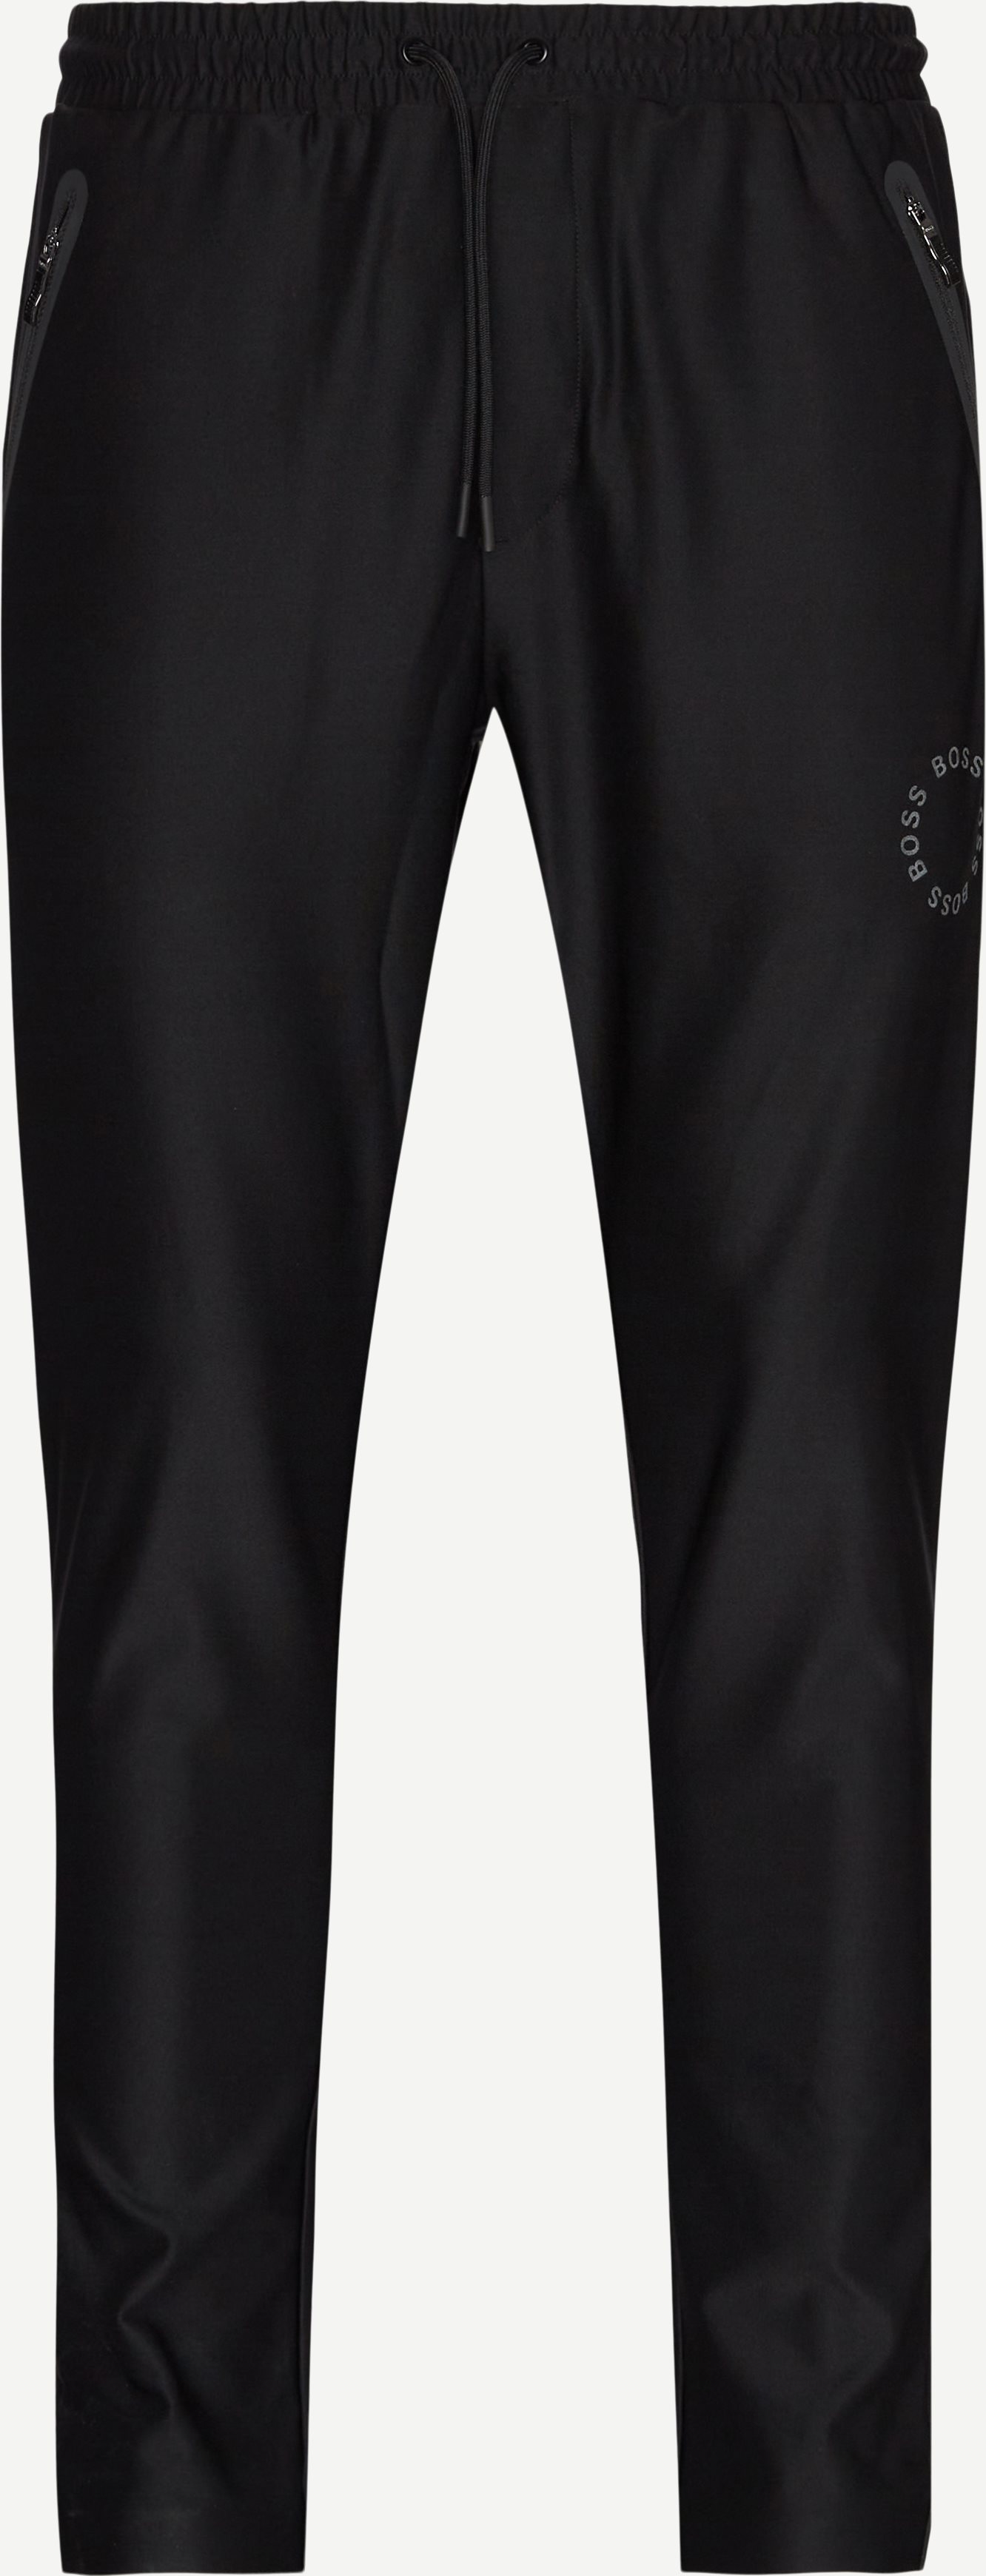 Havog Sweatpants - Trousers - Regular fit - Black